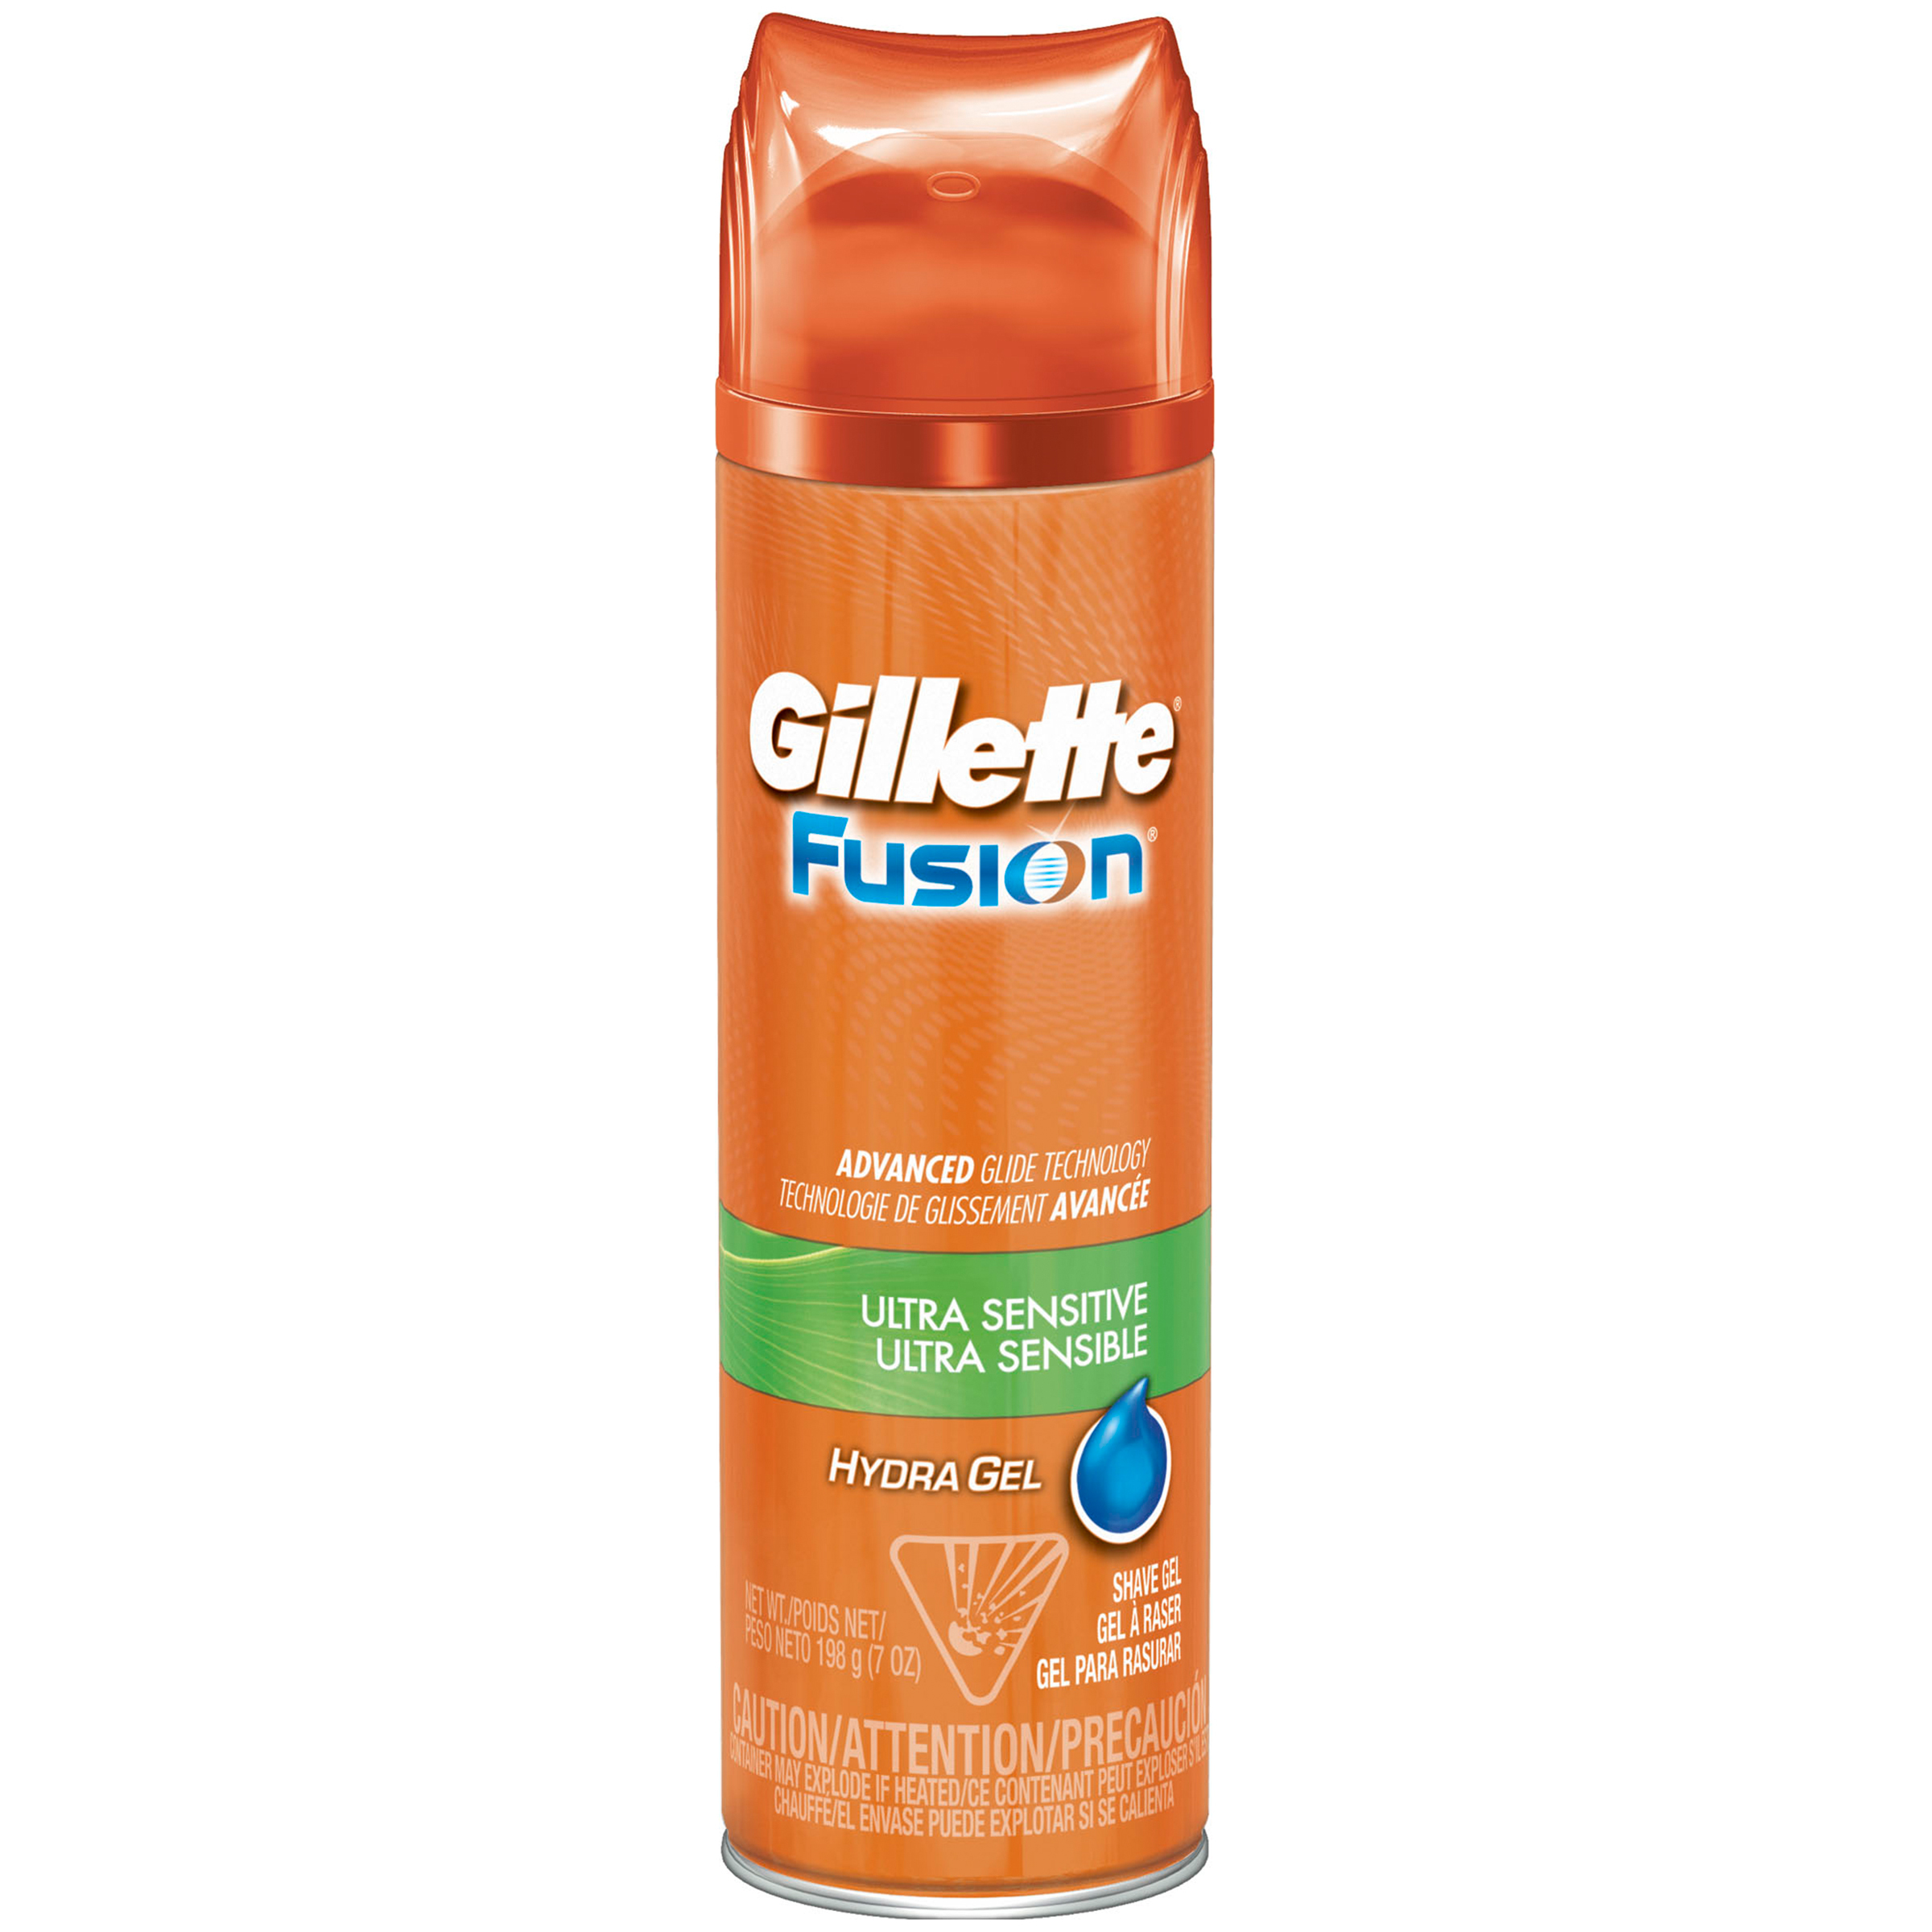 Gillette Fusion Hydragel Sensitive Gel 7 oz By Procter & Gamble Dist Co USA 